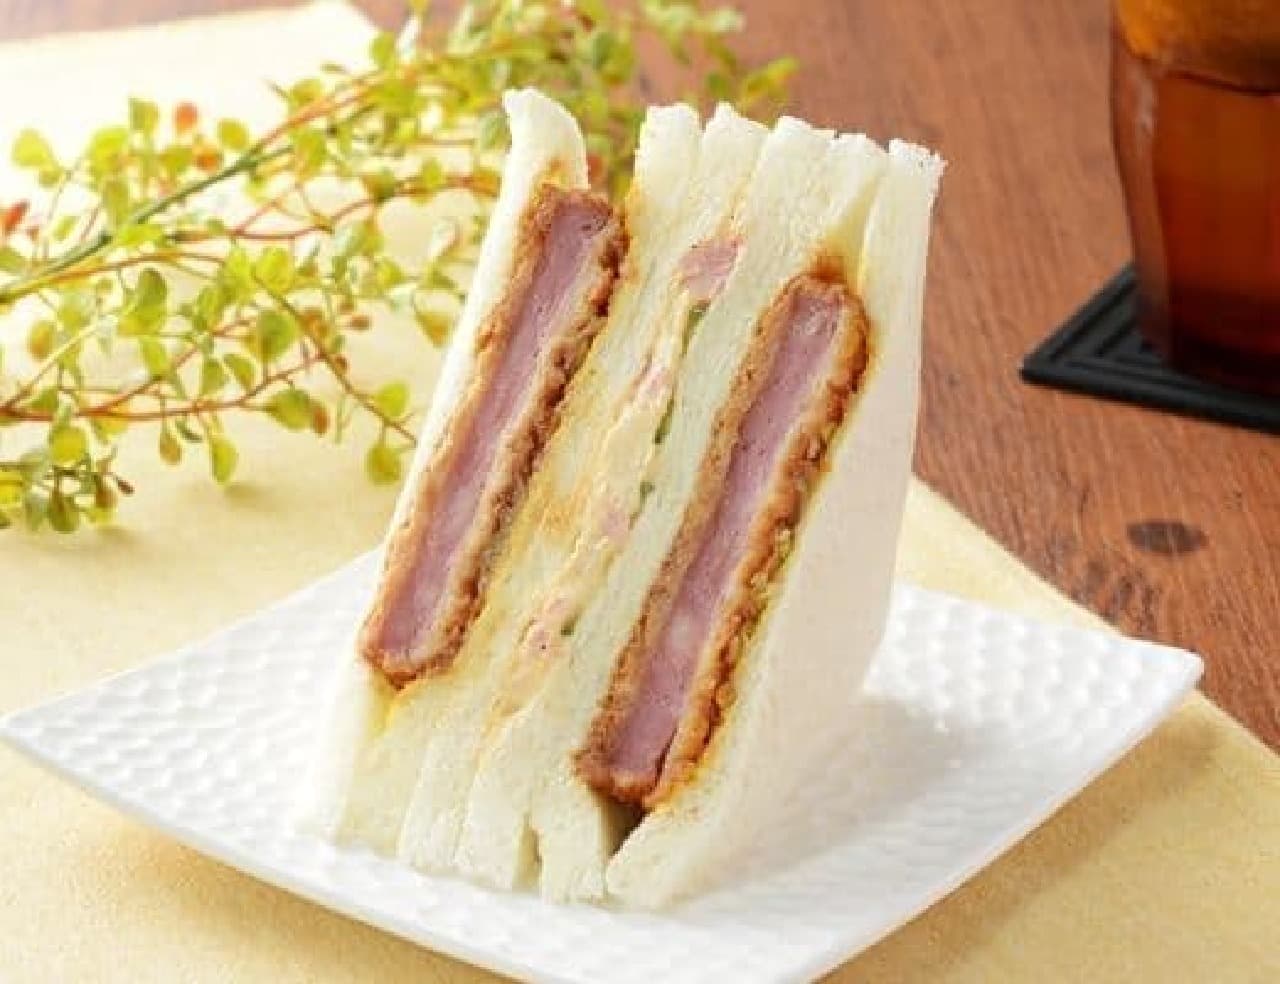 Lawson "Kushikatsu Tanaka supervised ham cutlet sandwich"